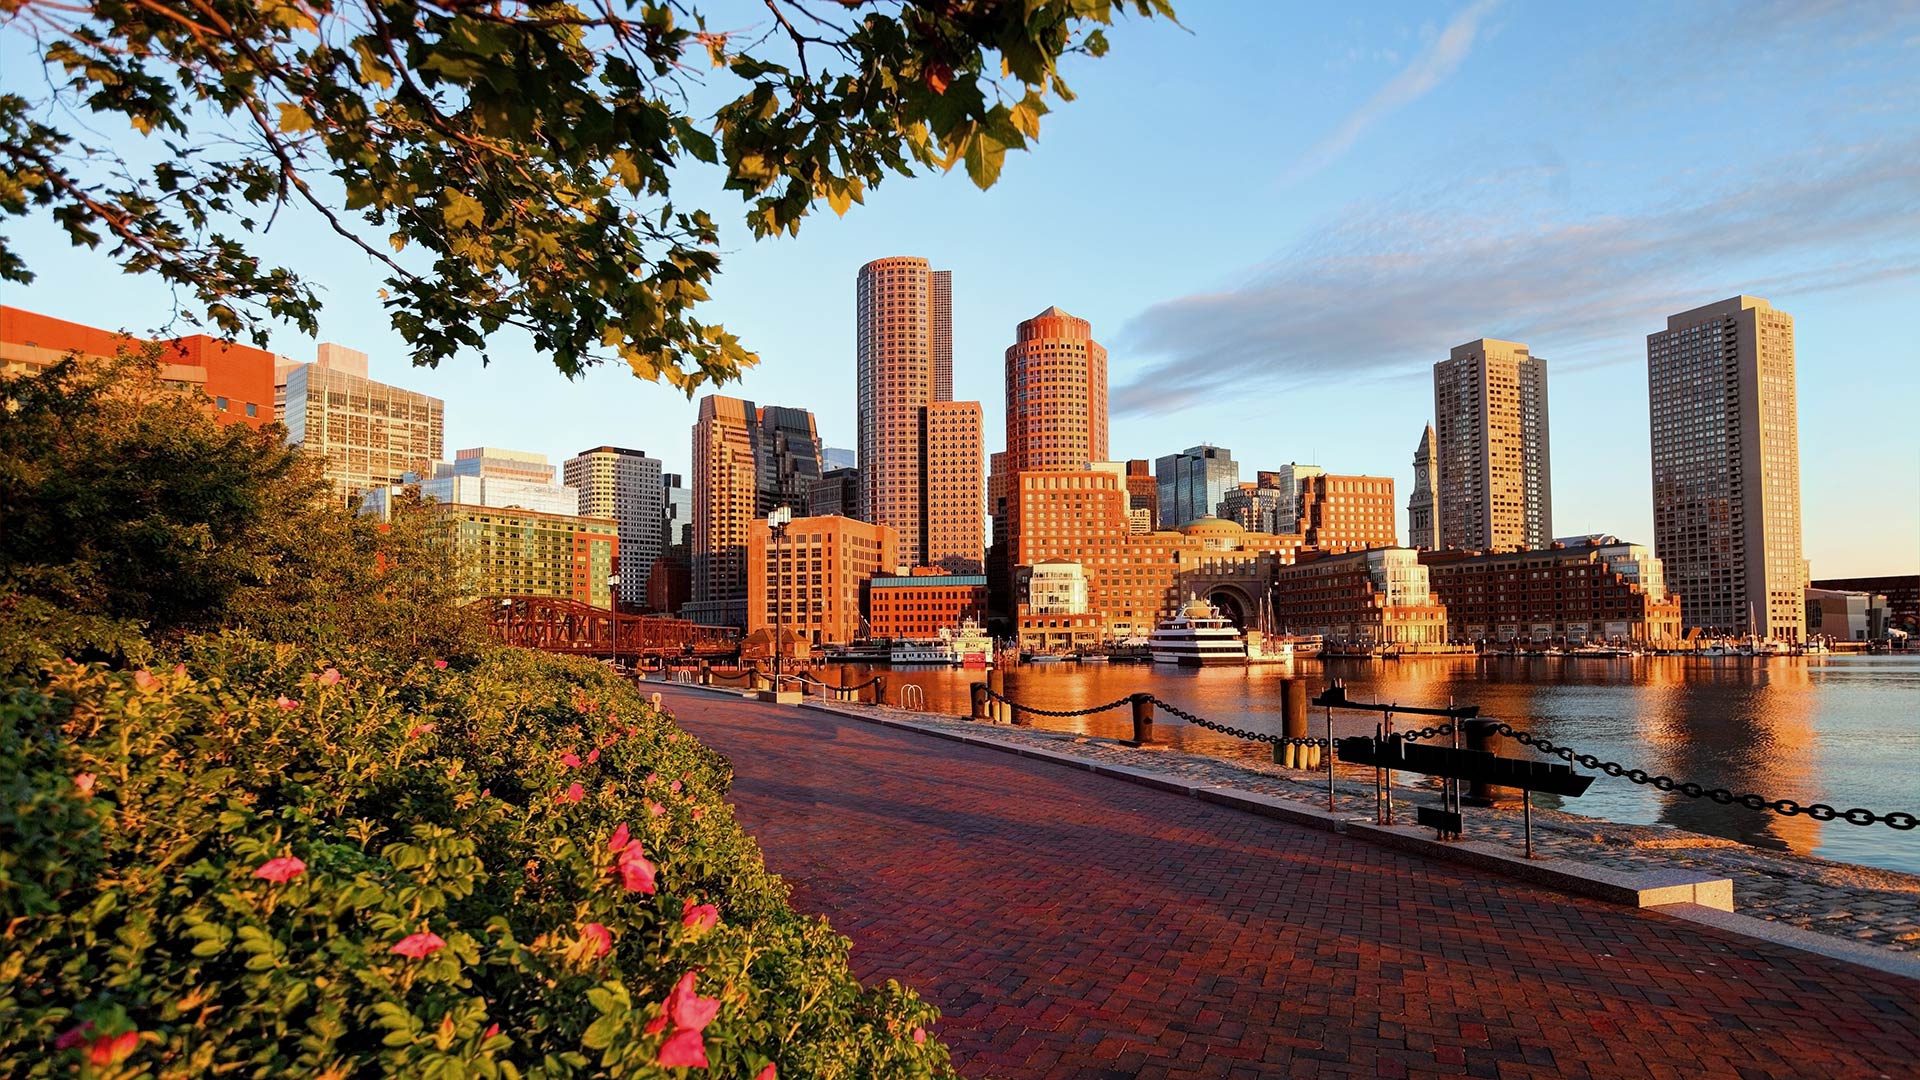 Waterfront view of Boston